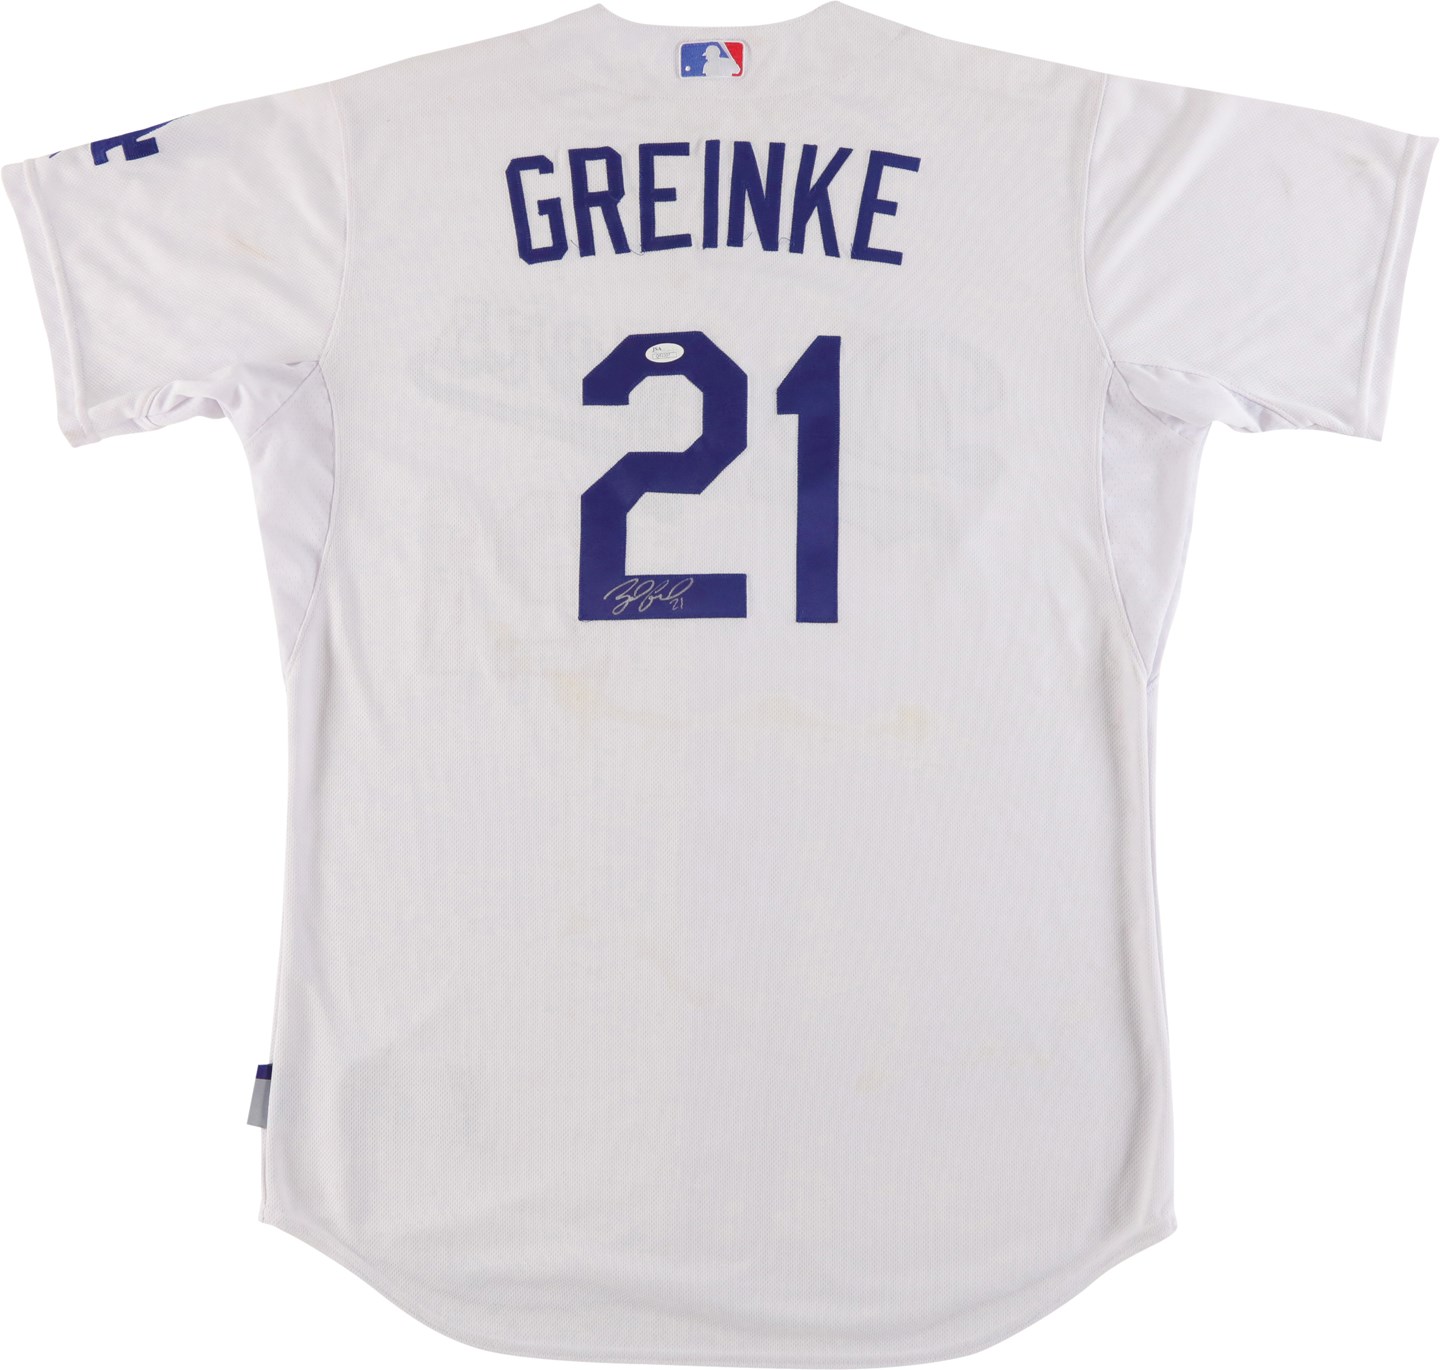 Baseball Equipment - 2015 Zack Greinke Los Angeles Dodgers Signed Game Worn Jersey